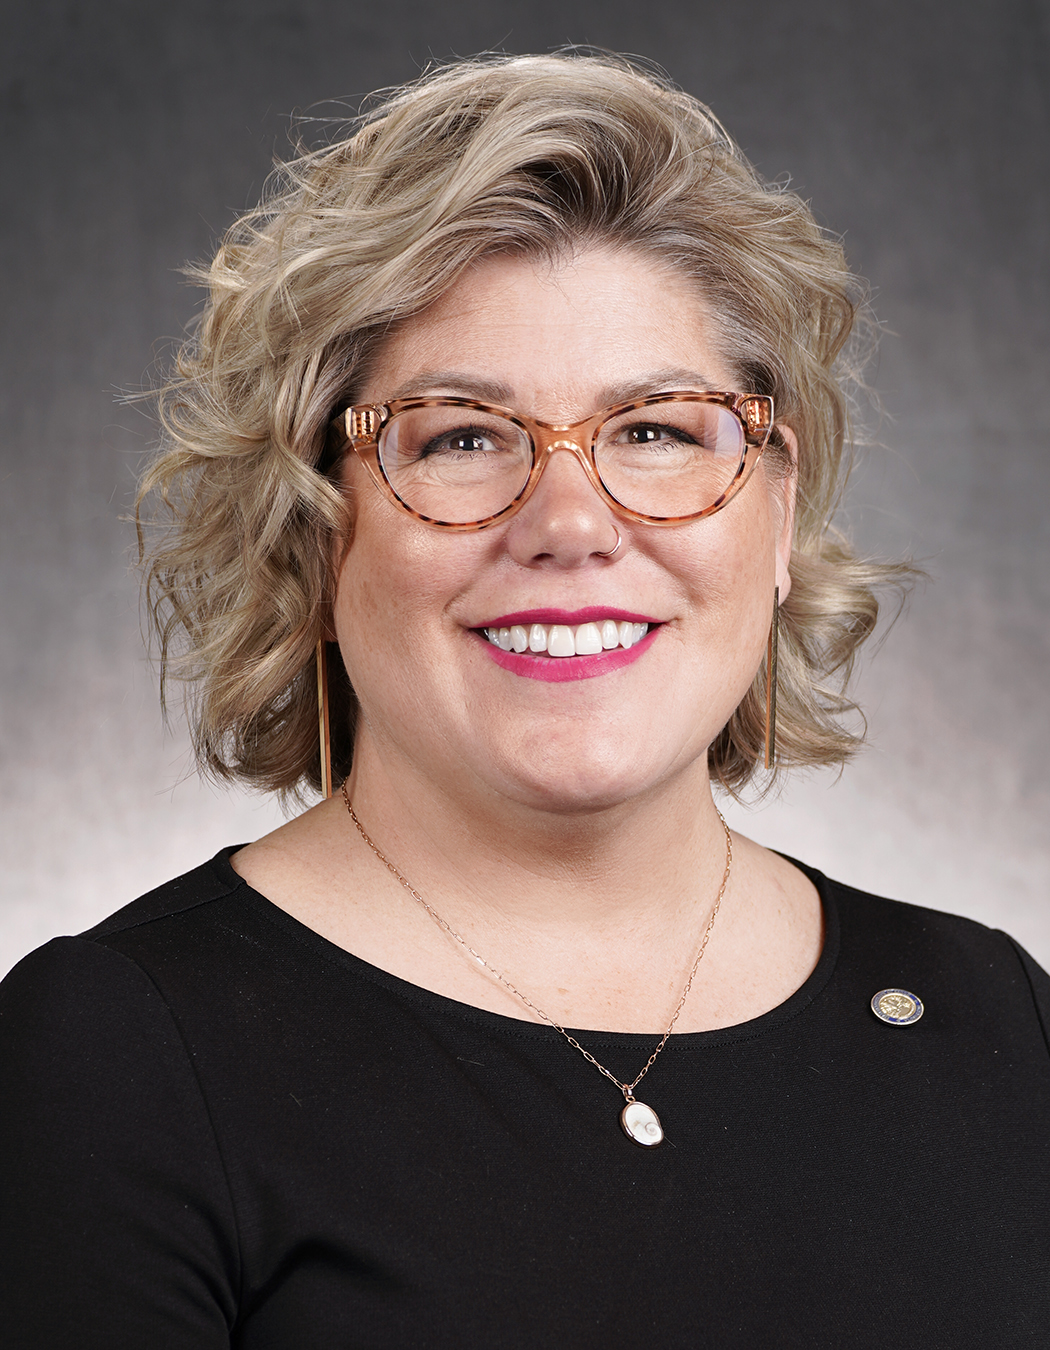  senator Dawn Gillman